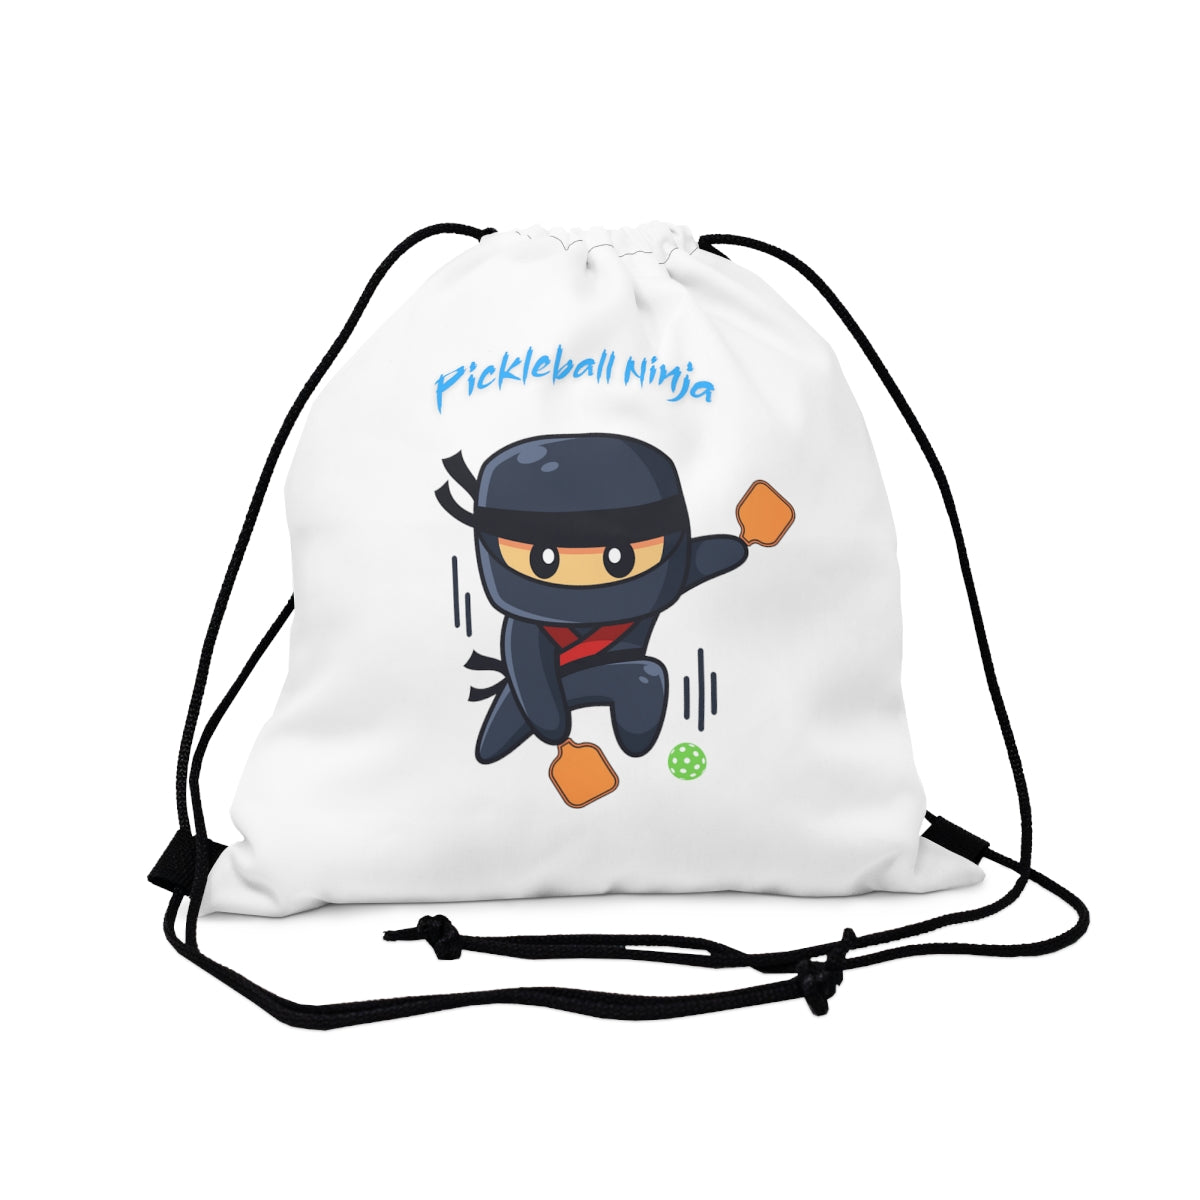 'Pickleball Ninja' Drawstring Bag